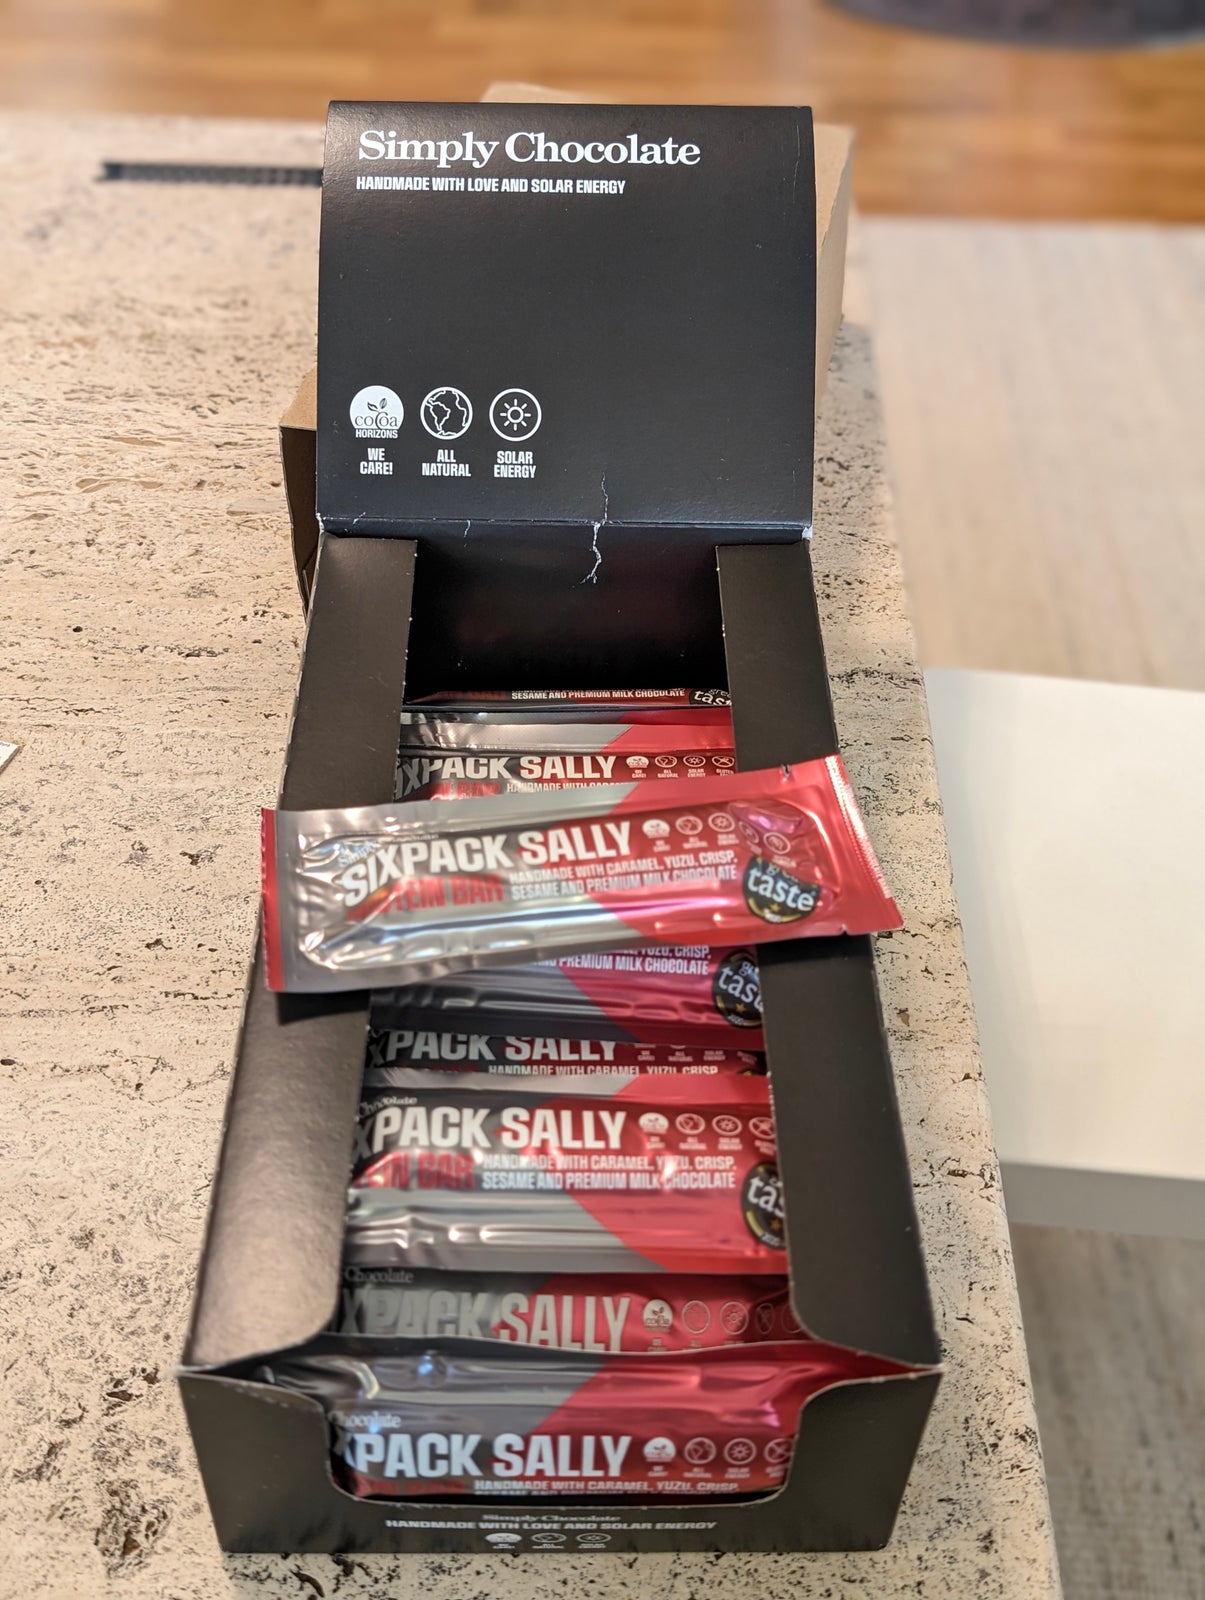 Slik og snacks, Simply Chocolate Sixpack Sally